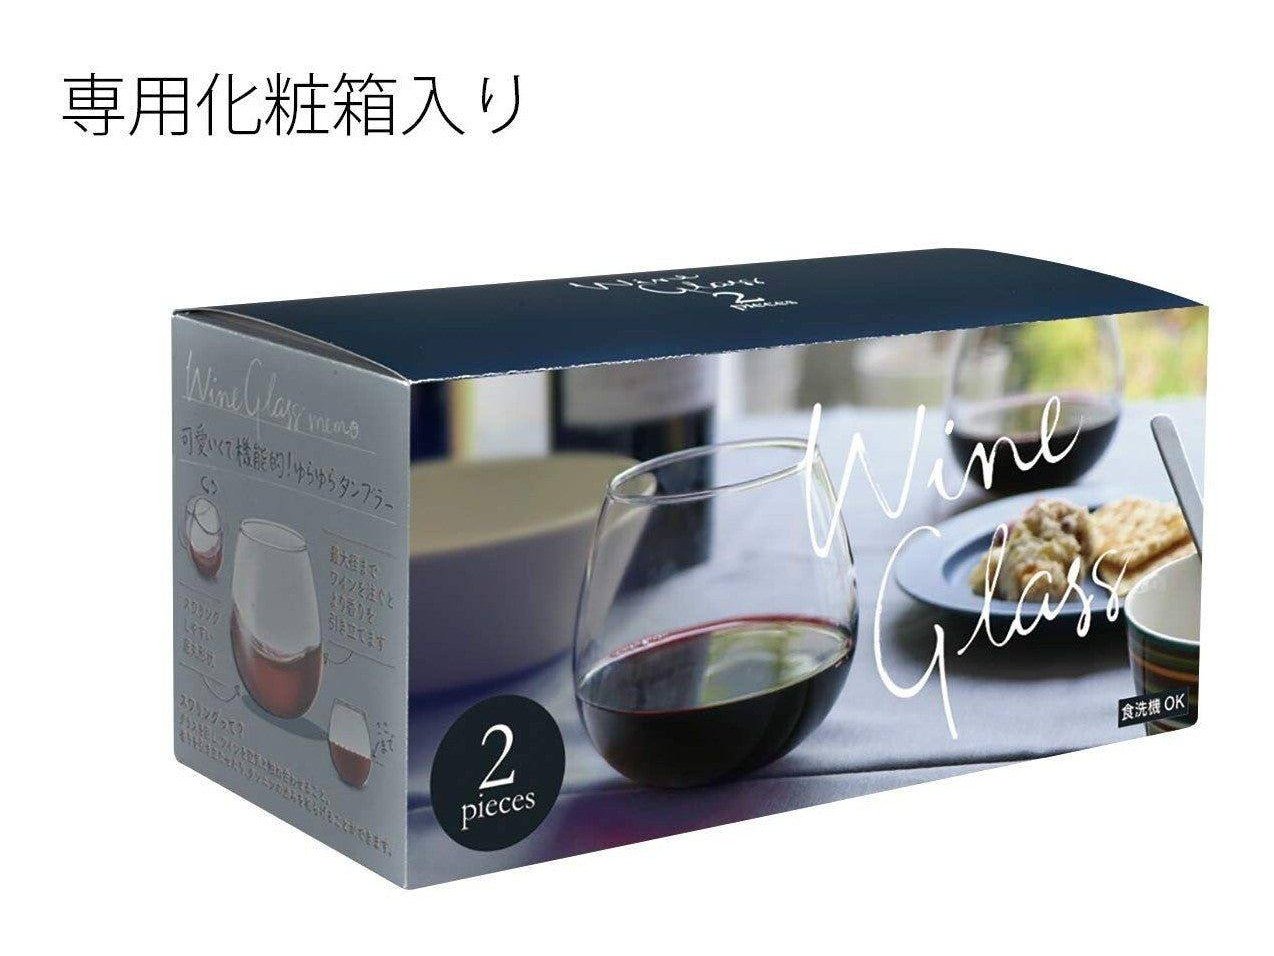 Toyo Sasaki Stemless Wine Glass ml pc